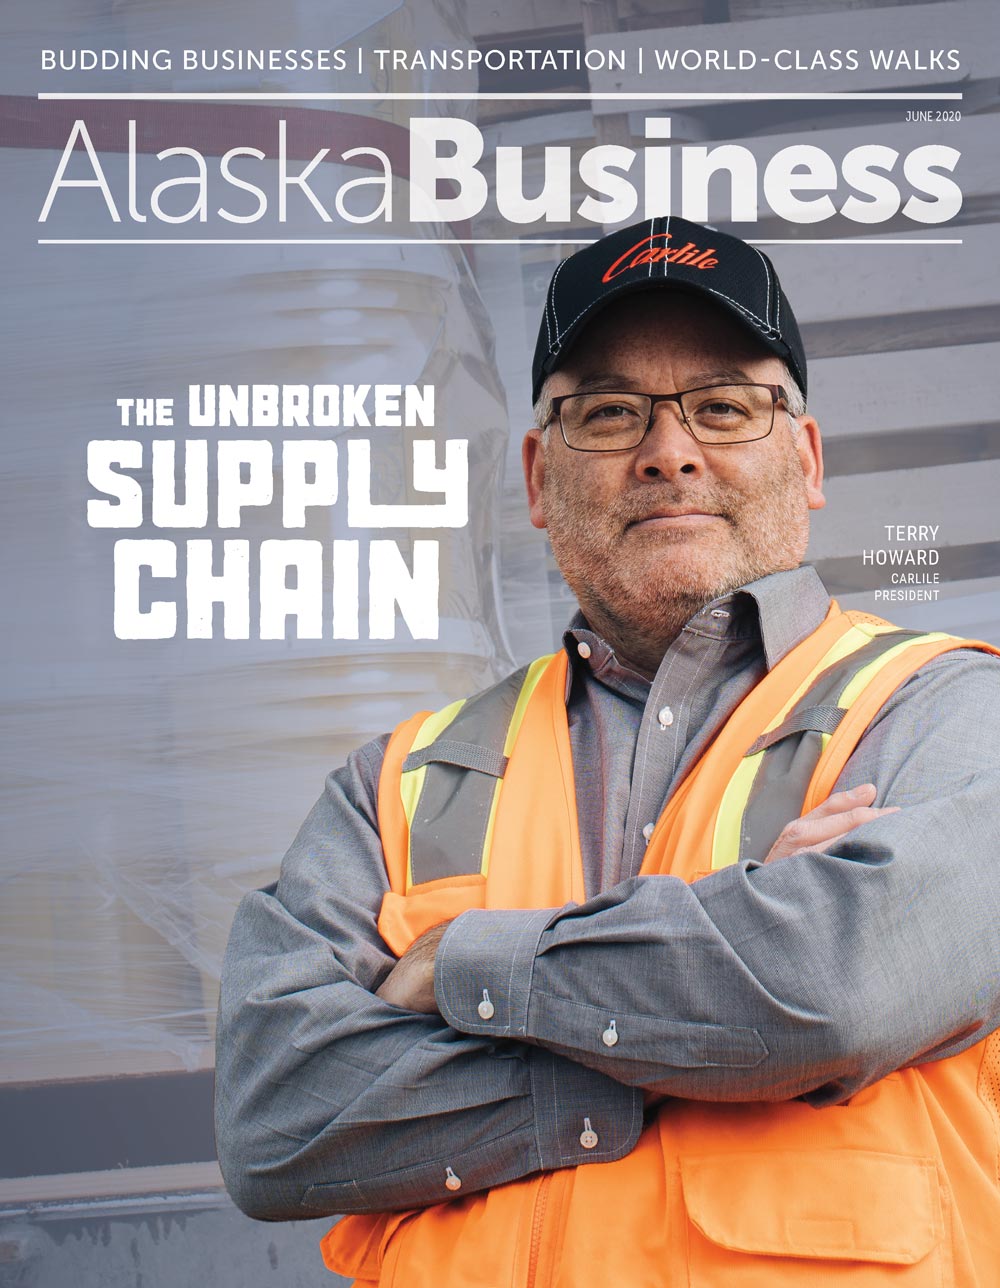 Alaska Business June 2020 cover